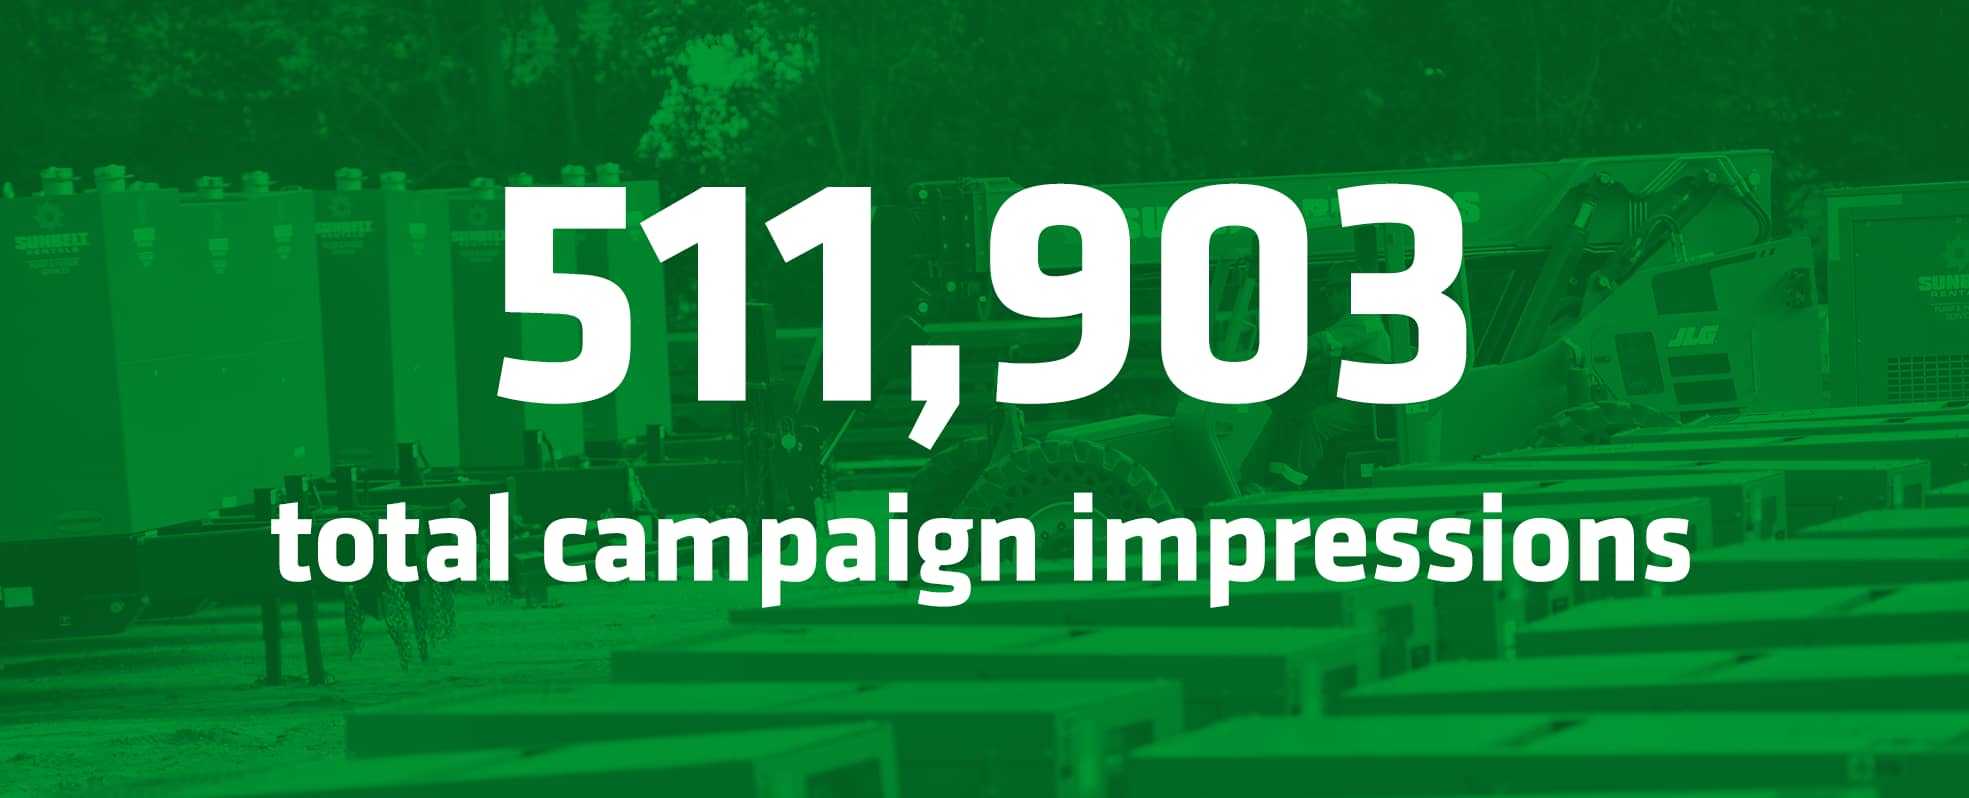 Sunbelt results 511,903 total campaign impressions